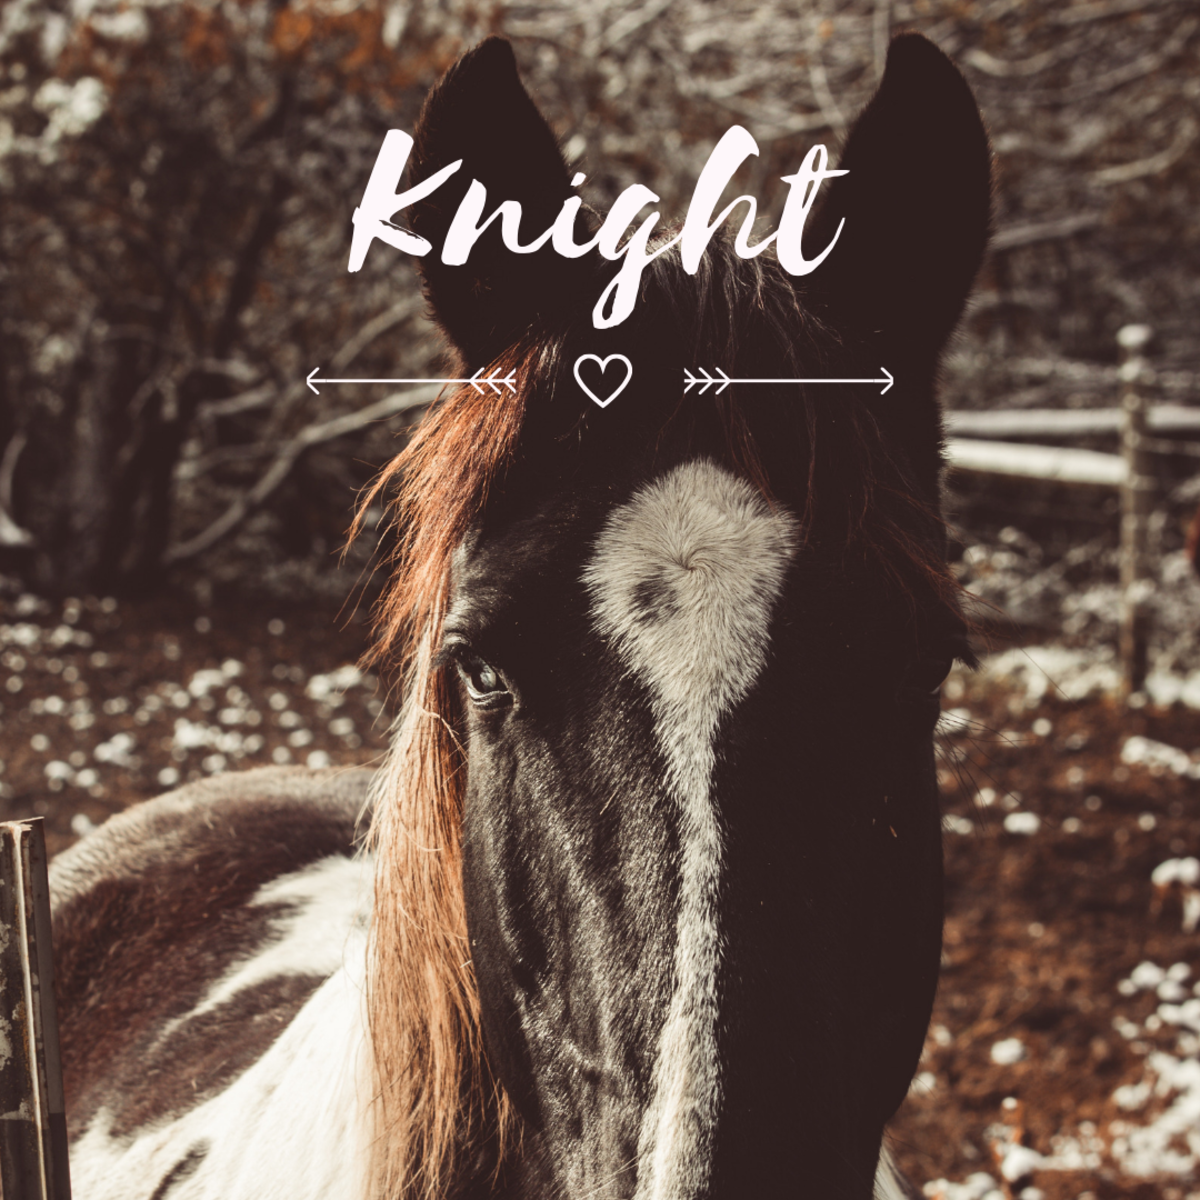 Is your gelding Knight?